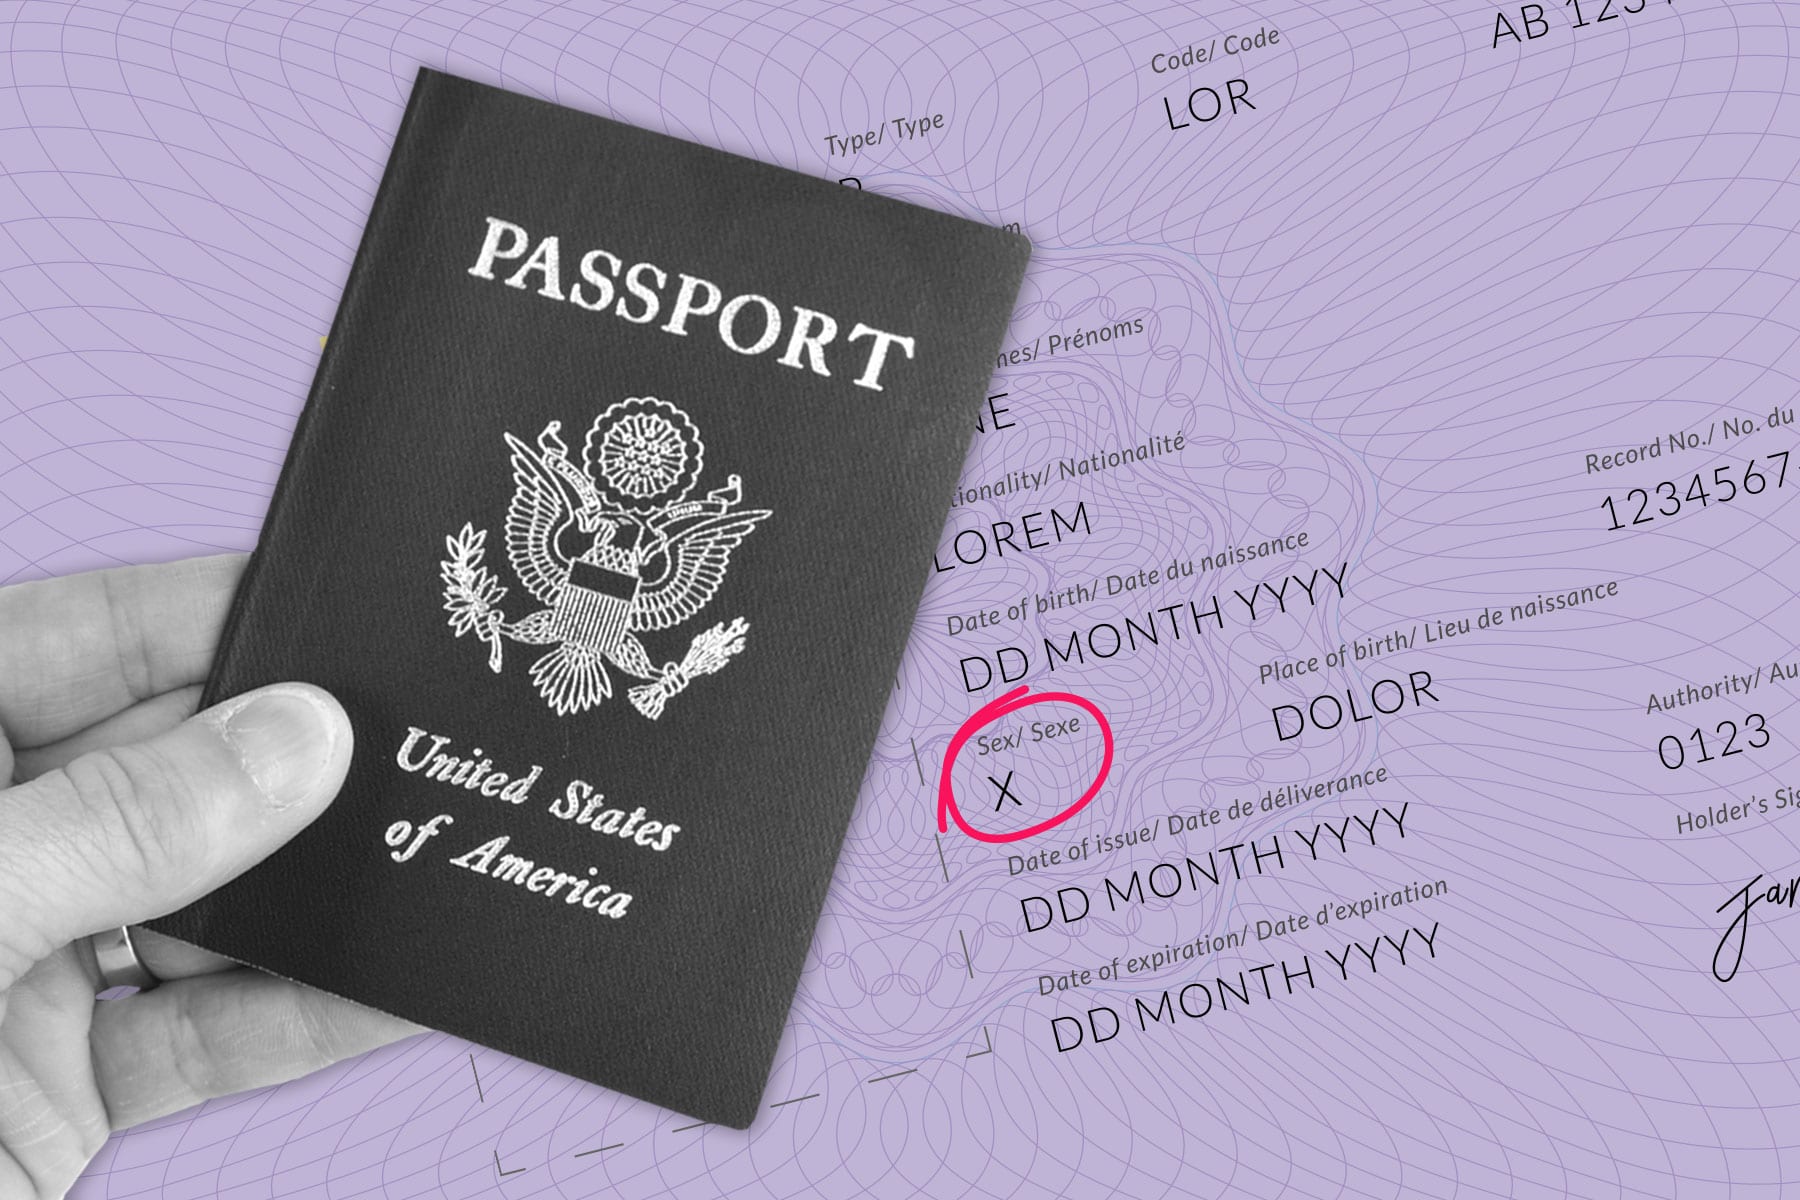 https://19thnews.org/wp-content/uploads/2021/07/19th-gender-markers-passports.jpg